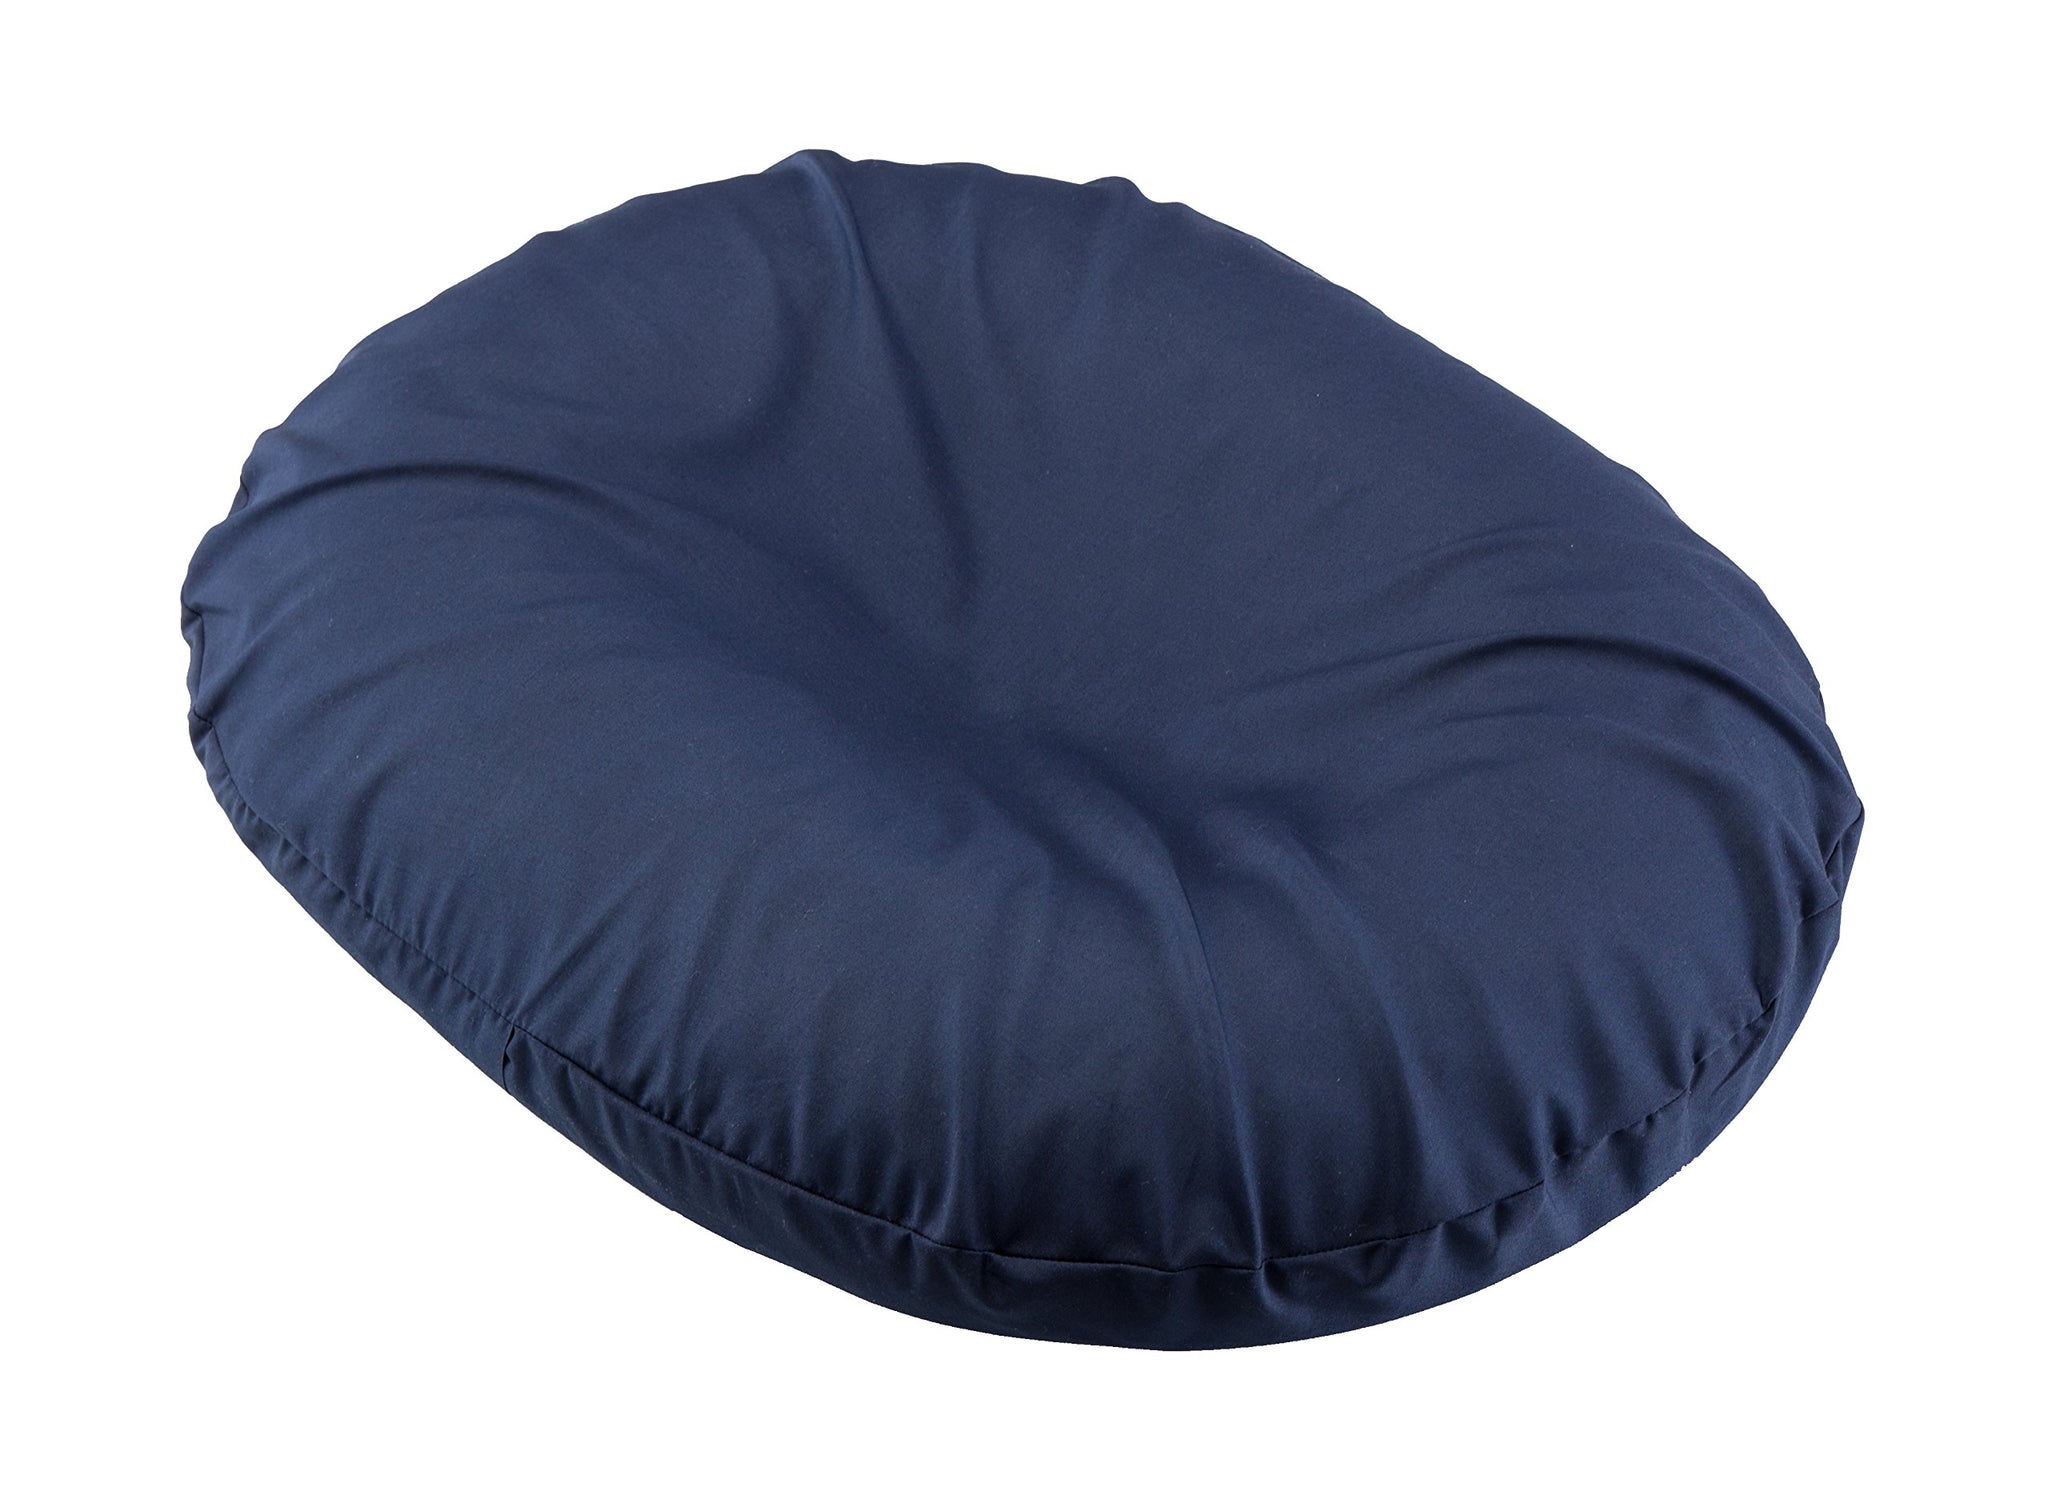 BodyHealt Donut Seat Ring Cushion Comfort Pillow for Hemorrhoids, Cocc –